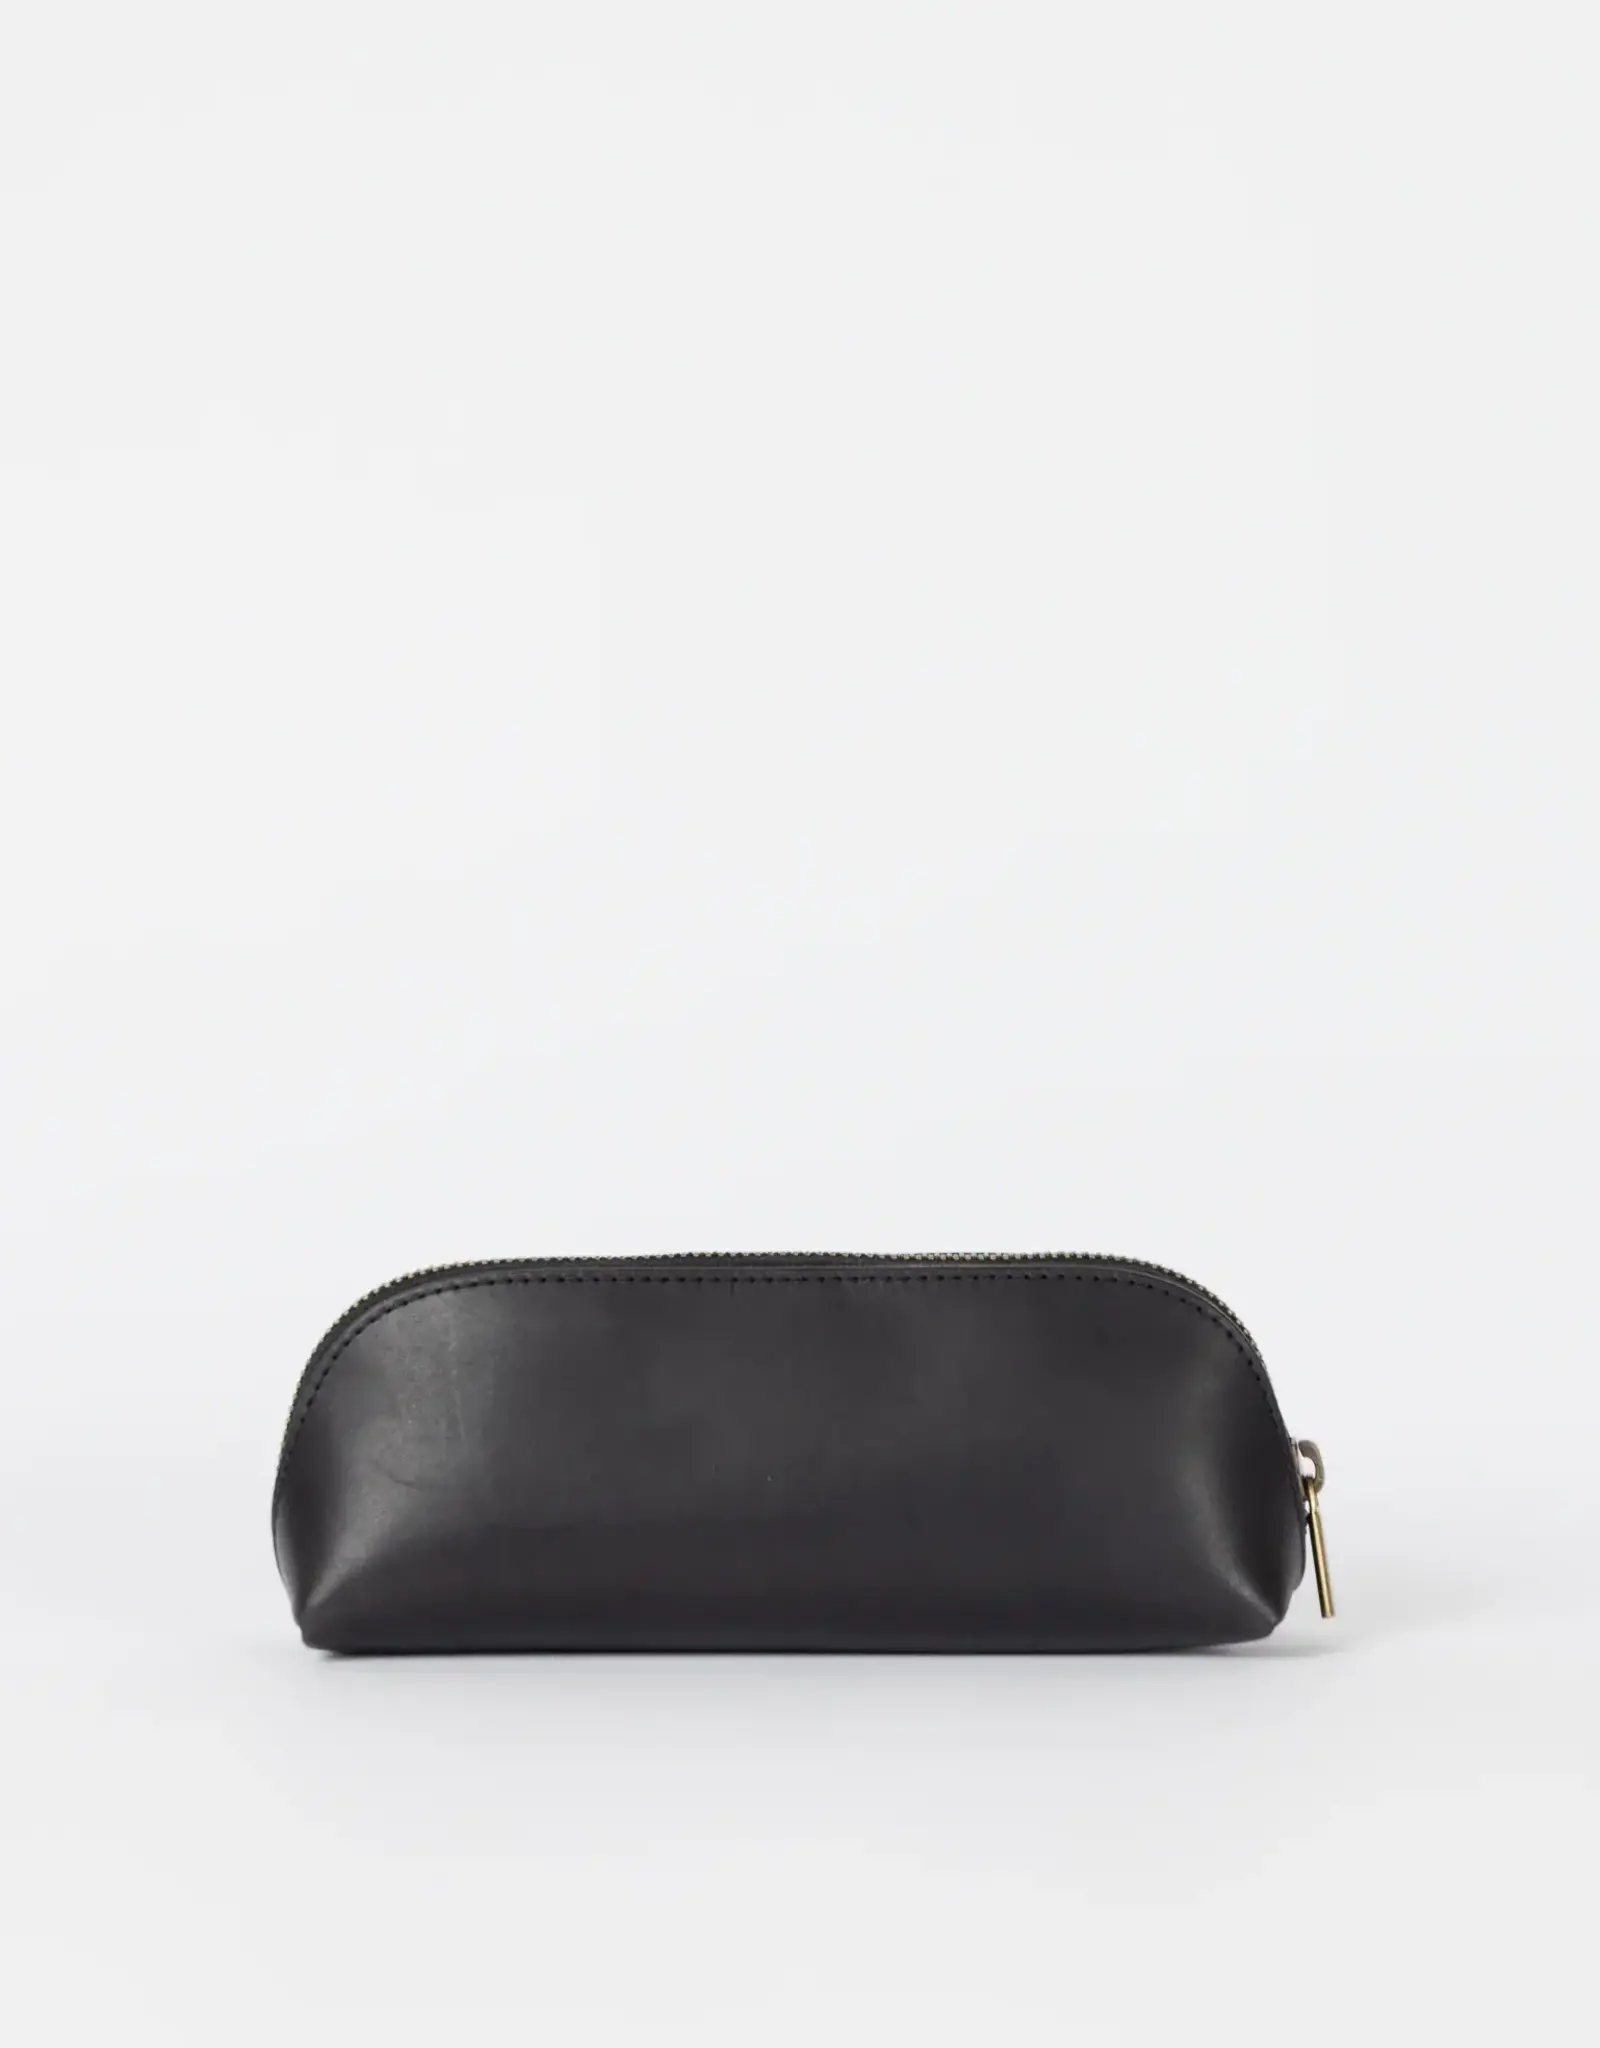 O My Bag O My Bag - Pencil case Large Black classic leather